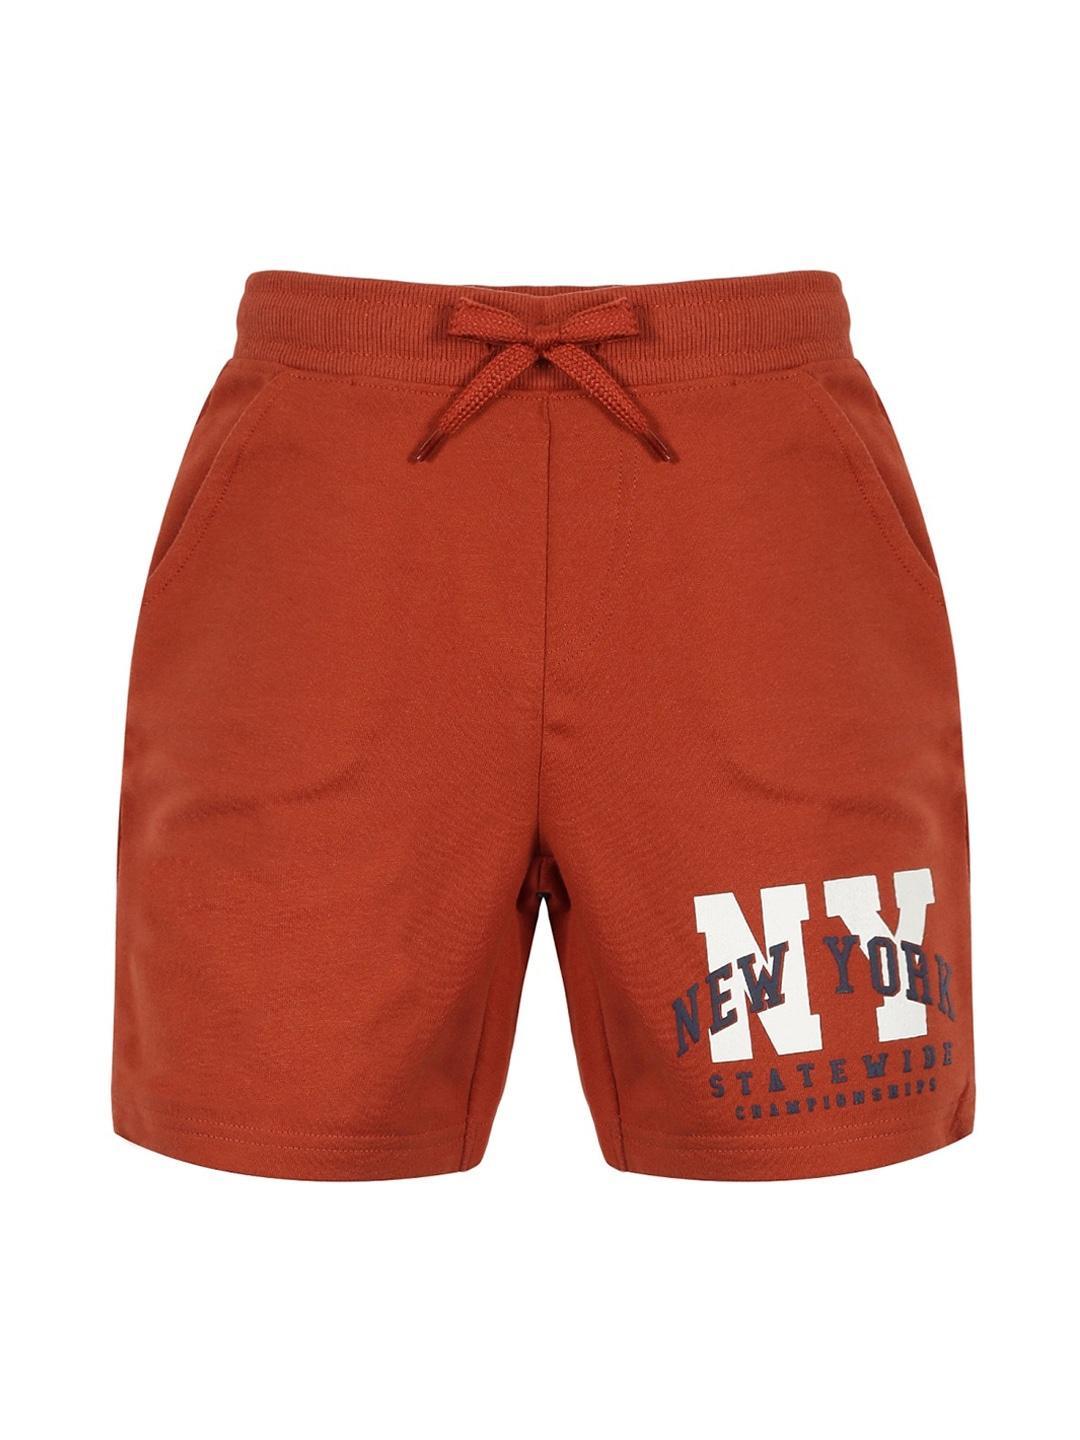 PLUM TREE Boys Regular-Fit Cotton Printed Shorts